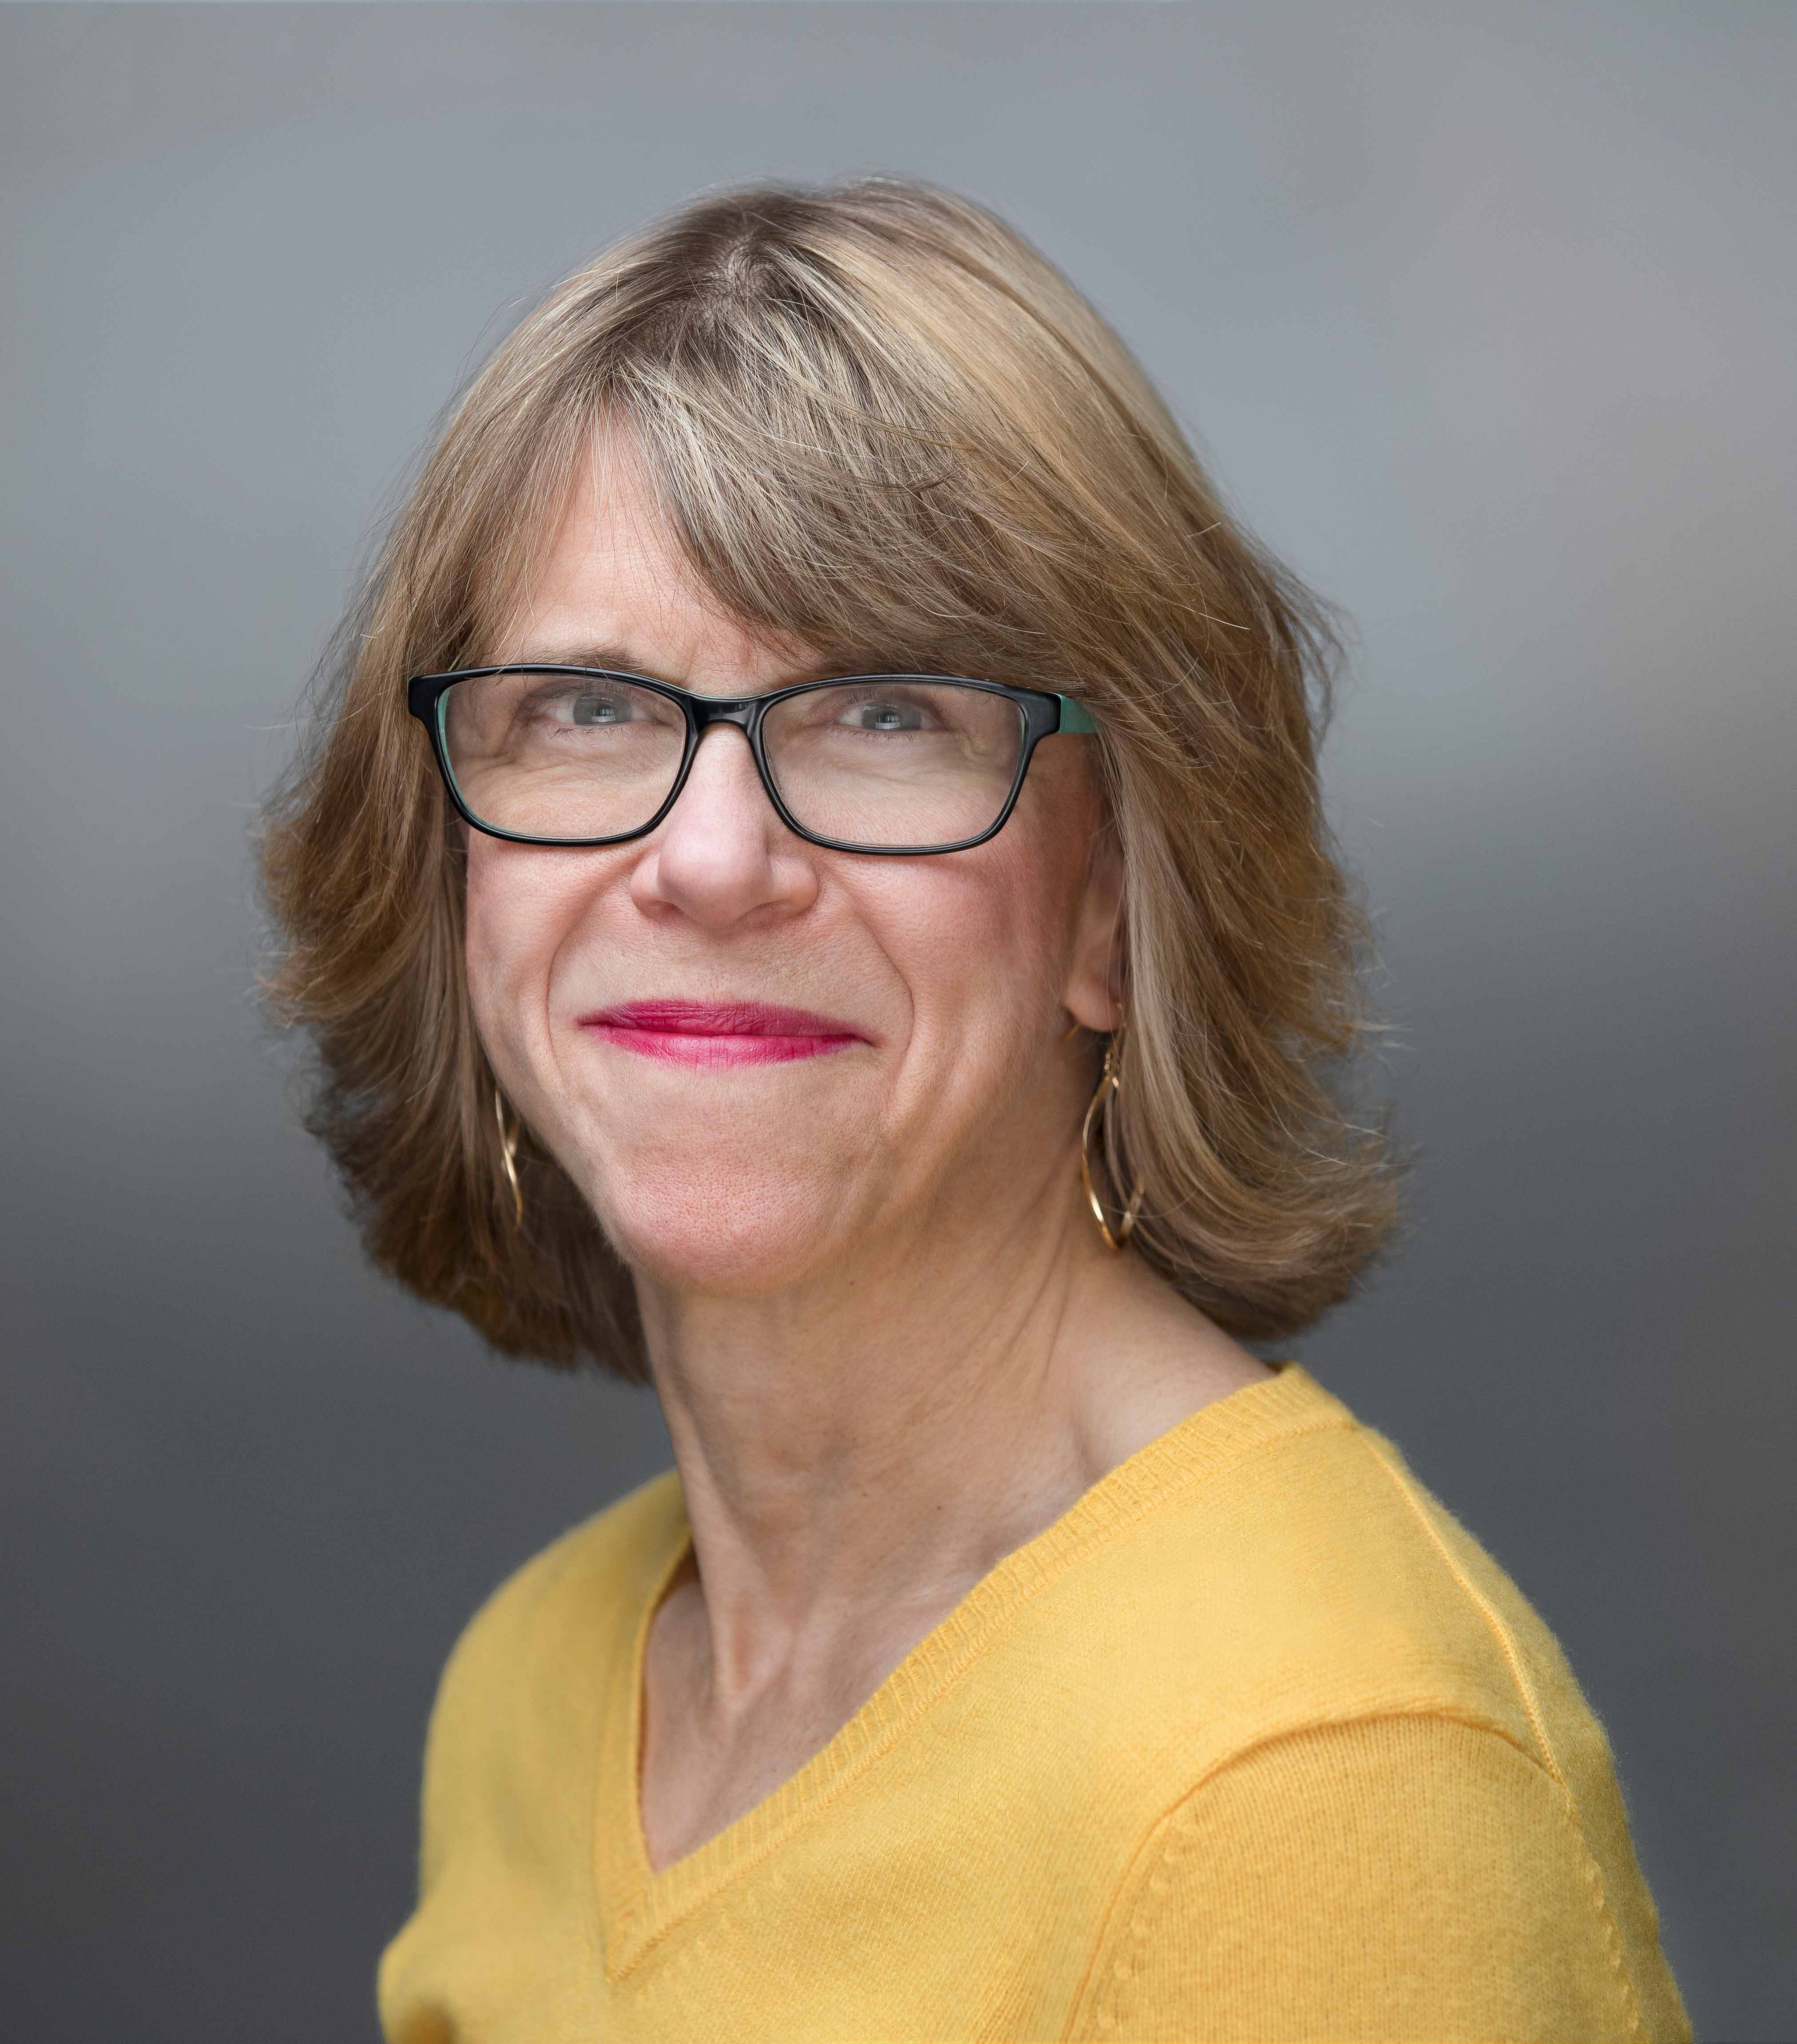 Dr. Sheila L. Molony, PhD, Professor of Nursing at Quinnipiac University